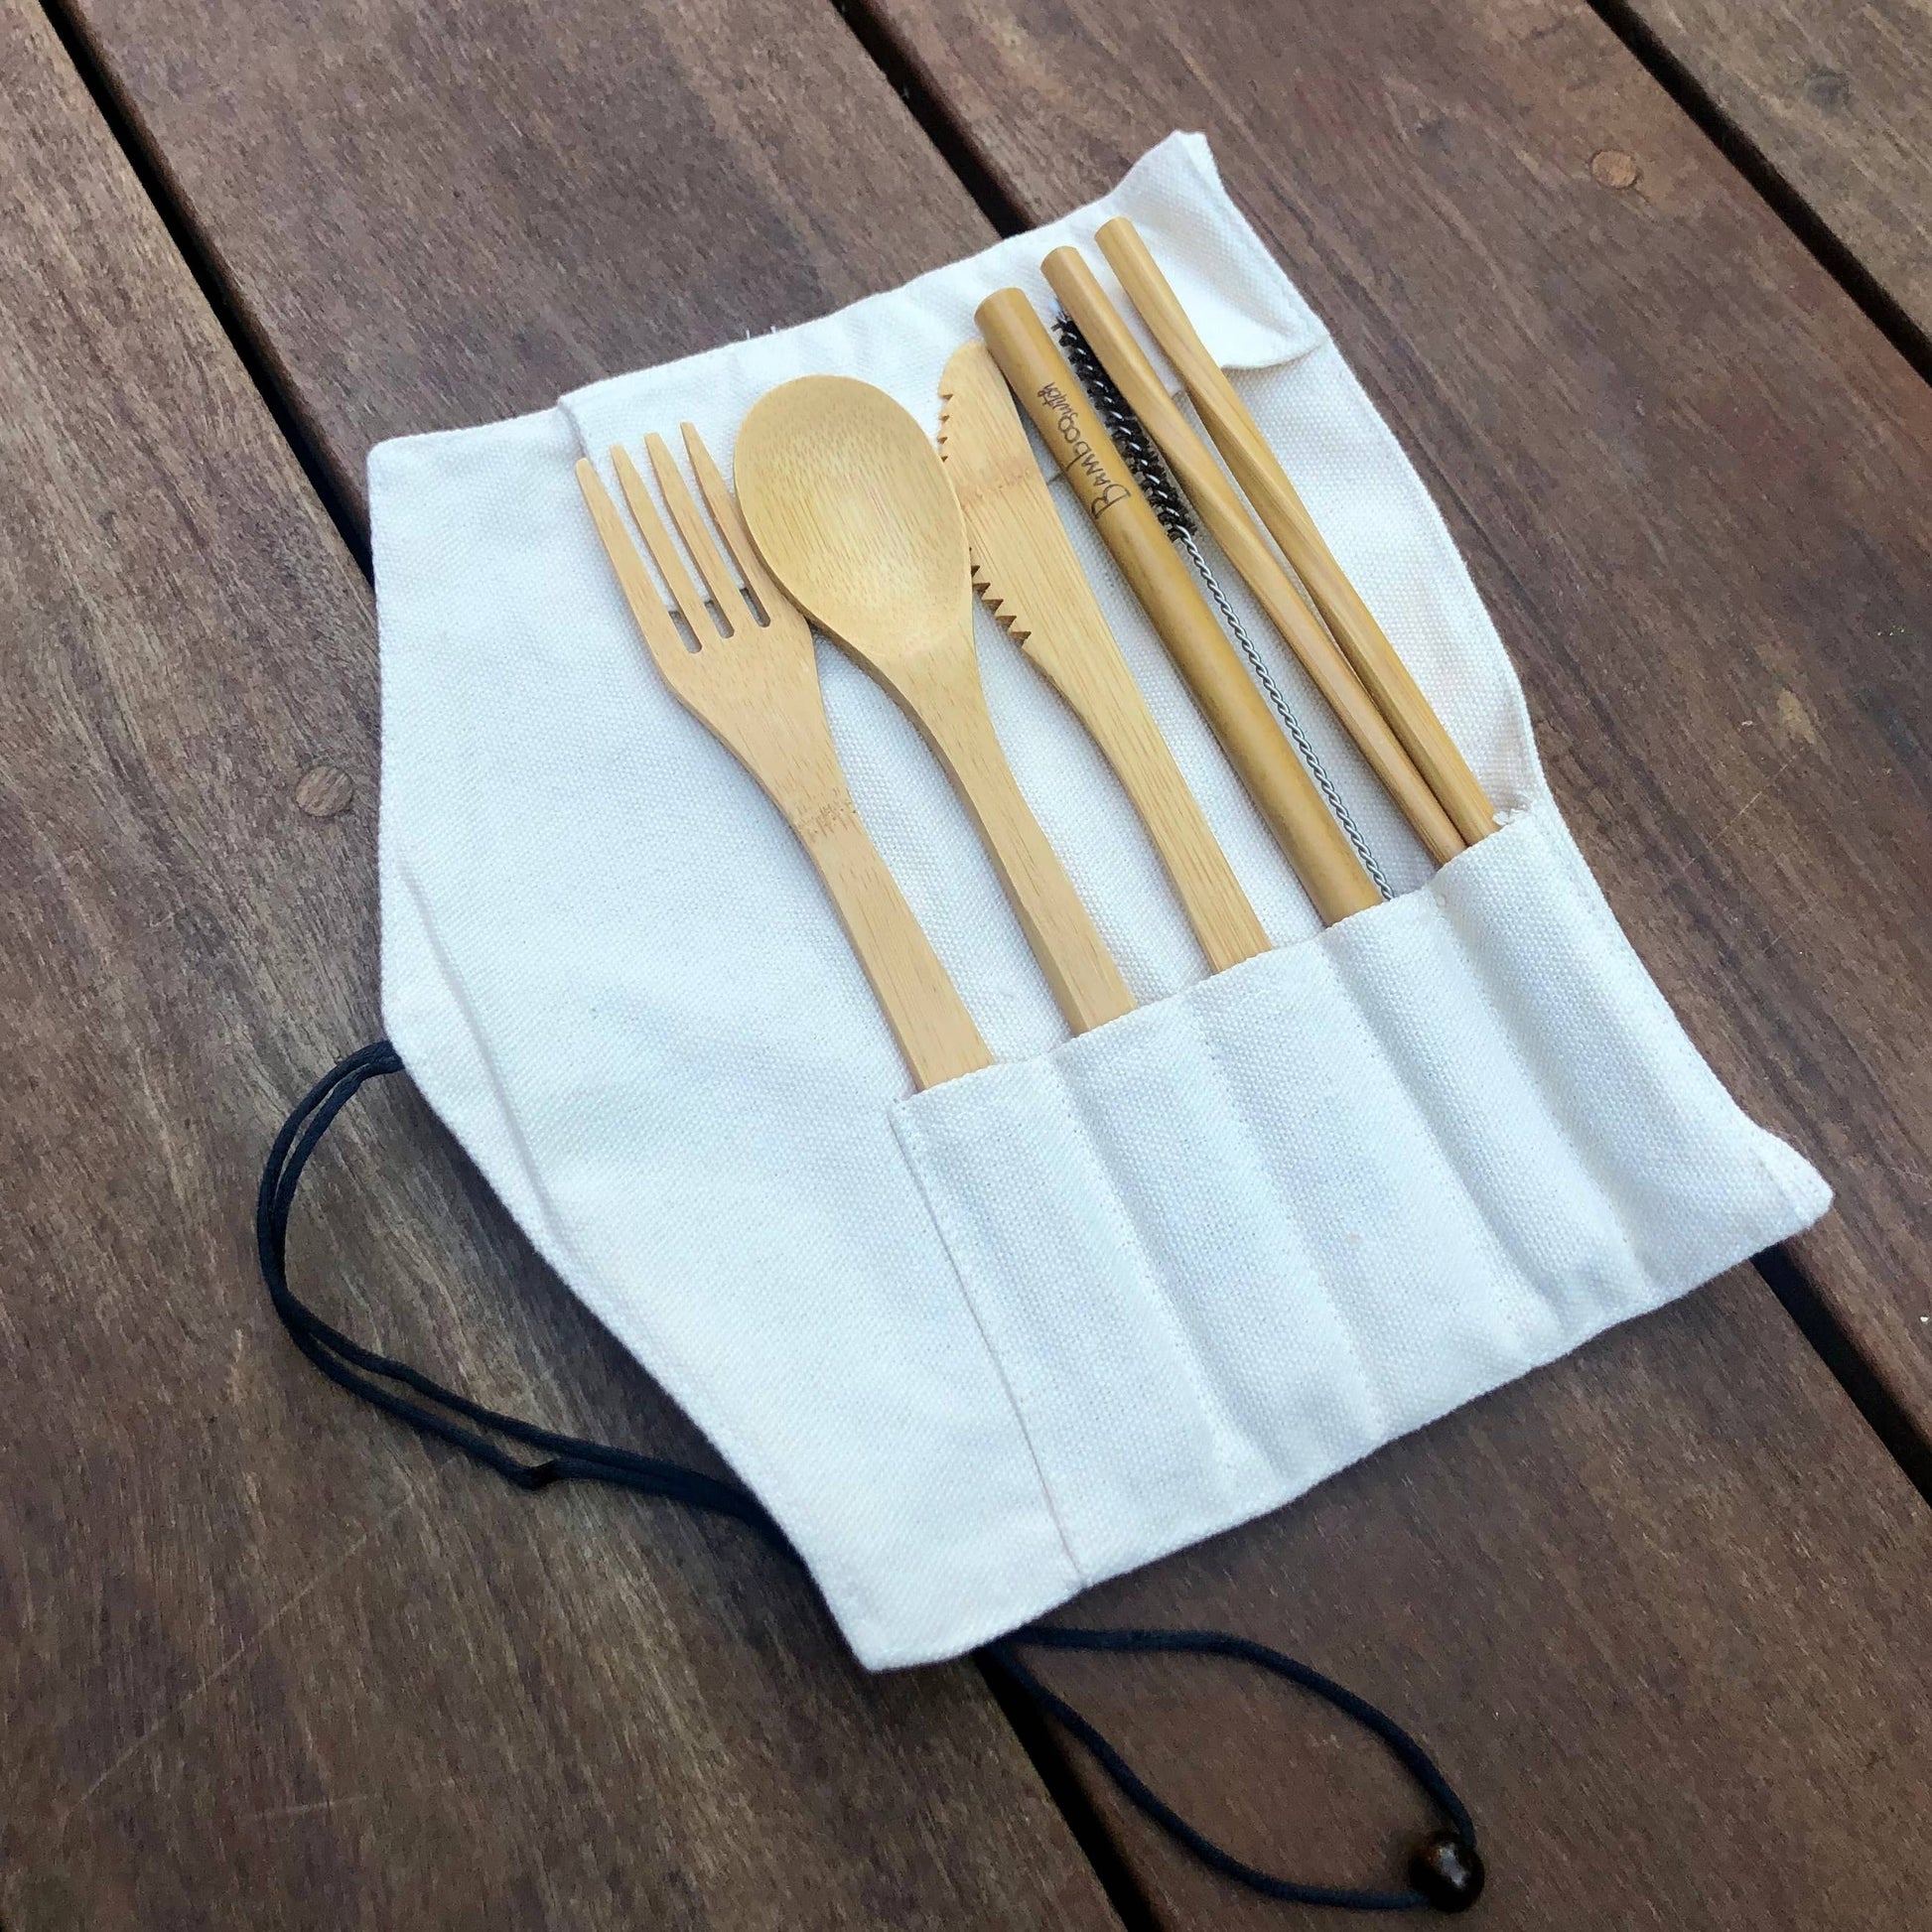 Bamboo travel cutlery set